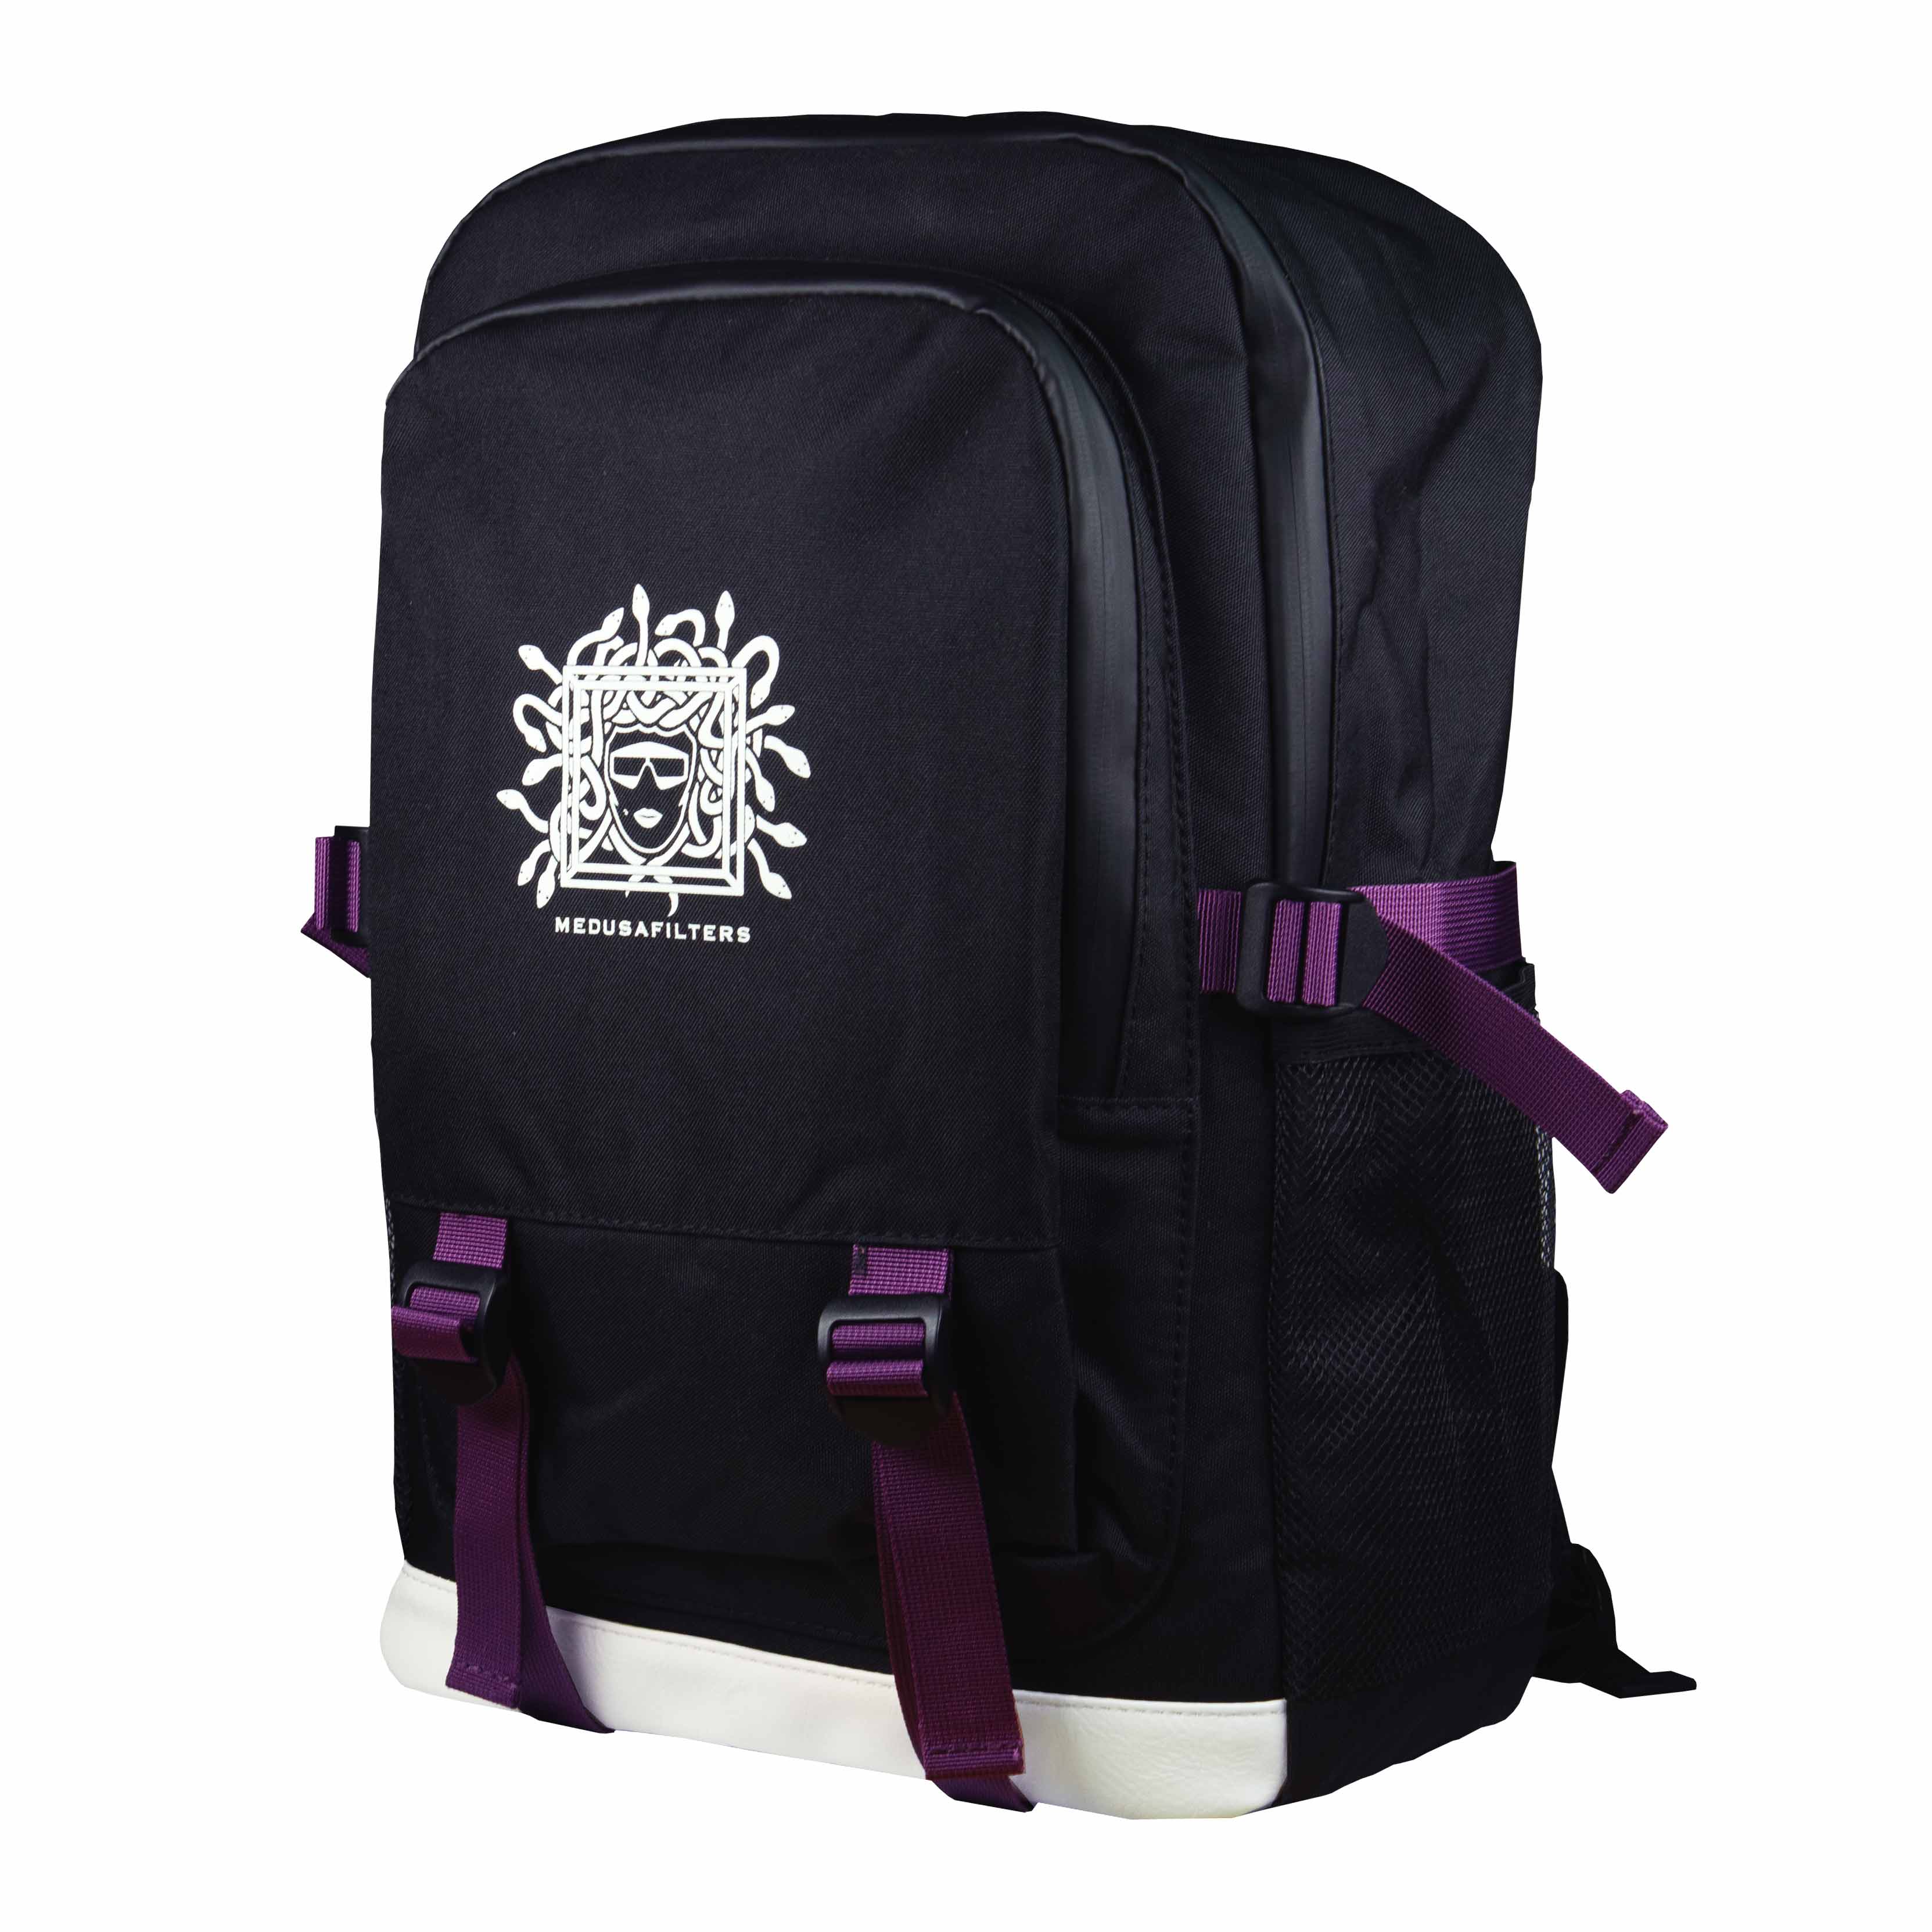 Odorproof backpack